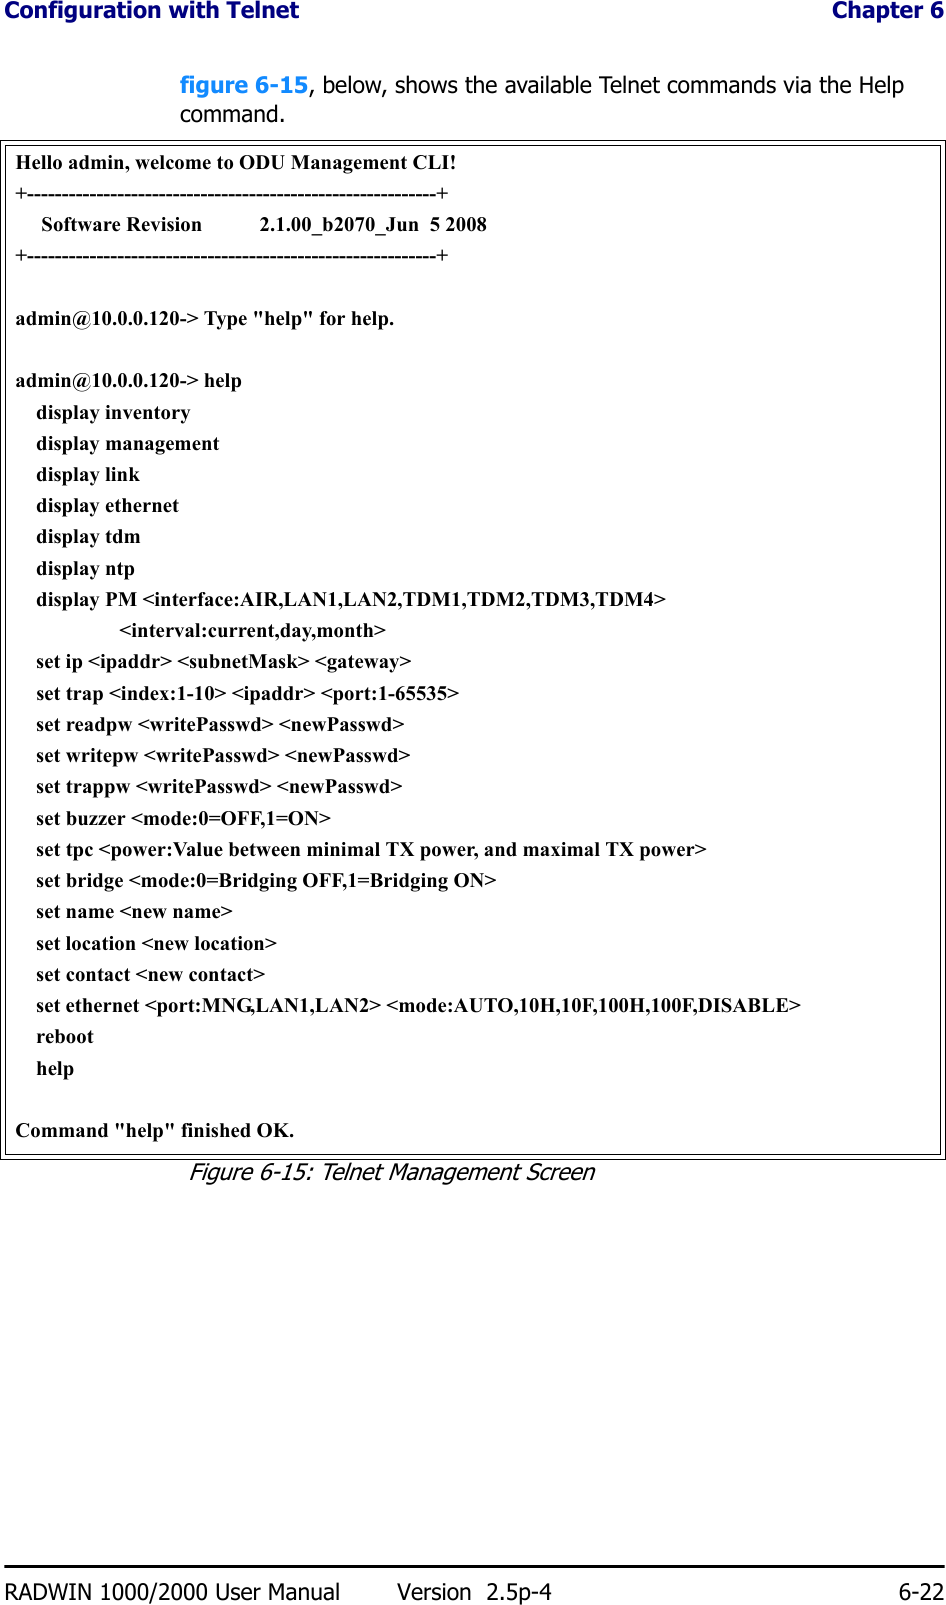 Configuration with Telnet  Chapter 6RADWIN 1000/2000 User Manual Version  2.5p-4 6-22figure 6-15, below, shows the available Telnet commands via the Help command.Hello admin, welcome to ODU Management CLI!+-----------------------------------------------------------+     Software Revision           2.1.00_b2070_Jun  5 2008+-----------------------------------------------------------+admin@10.0.0.120-&gt; Type &quot;help&quot; for help.admin@10.0.0.120-&gt; help    display inventory    display management    display link    display ethernet    display tdm    display ntp    display PM &lt;interface:AIR,LAN1,LAN2,TDM1,TDM2,TDM3,TDM4&gt;                    &lt;interval:current,day,month&gt;    set ip &lt;ipaddr&gt; &lt;subnetMask&gt; &lt;gateway&gt;    set trap &lt;index:1-10&gt; &lt;ipaddr&gt; &lt;port:1-65535&gt;    set readpw &lt;writePasswd&gt; &lt;newPasswd&gt;    set writepw &lt;writePasswd&gt; &lt;newPasswd&gt;    set trappw &lt;writePasswd&gt; &lt;newPasswd&gt;    set buzzer &lt;mode:0=OFF,1=ON&gt;    set tpc &lt;power:Value between minimal TX power, and maximal TX power&gt;    set bridge &lt;mode:0=Bridging OFF,1=Bridging ON&gt;    set name &lt;new name&gt;    set location &lt;new location&gt;    set contact &lt;new contact&gt;    set ethernet &lt;port:MNG,LAN1,LAN2&gt; &lt;mode:AUTO,10H,10F,100H,100F,DISABLE&gt;    reboot    helpCommand &quot;help&quot; finished OK.Figure 6-15: Telnet Management Screen